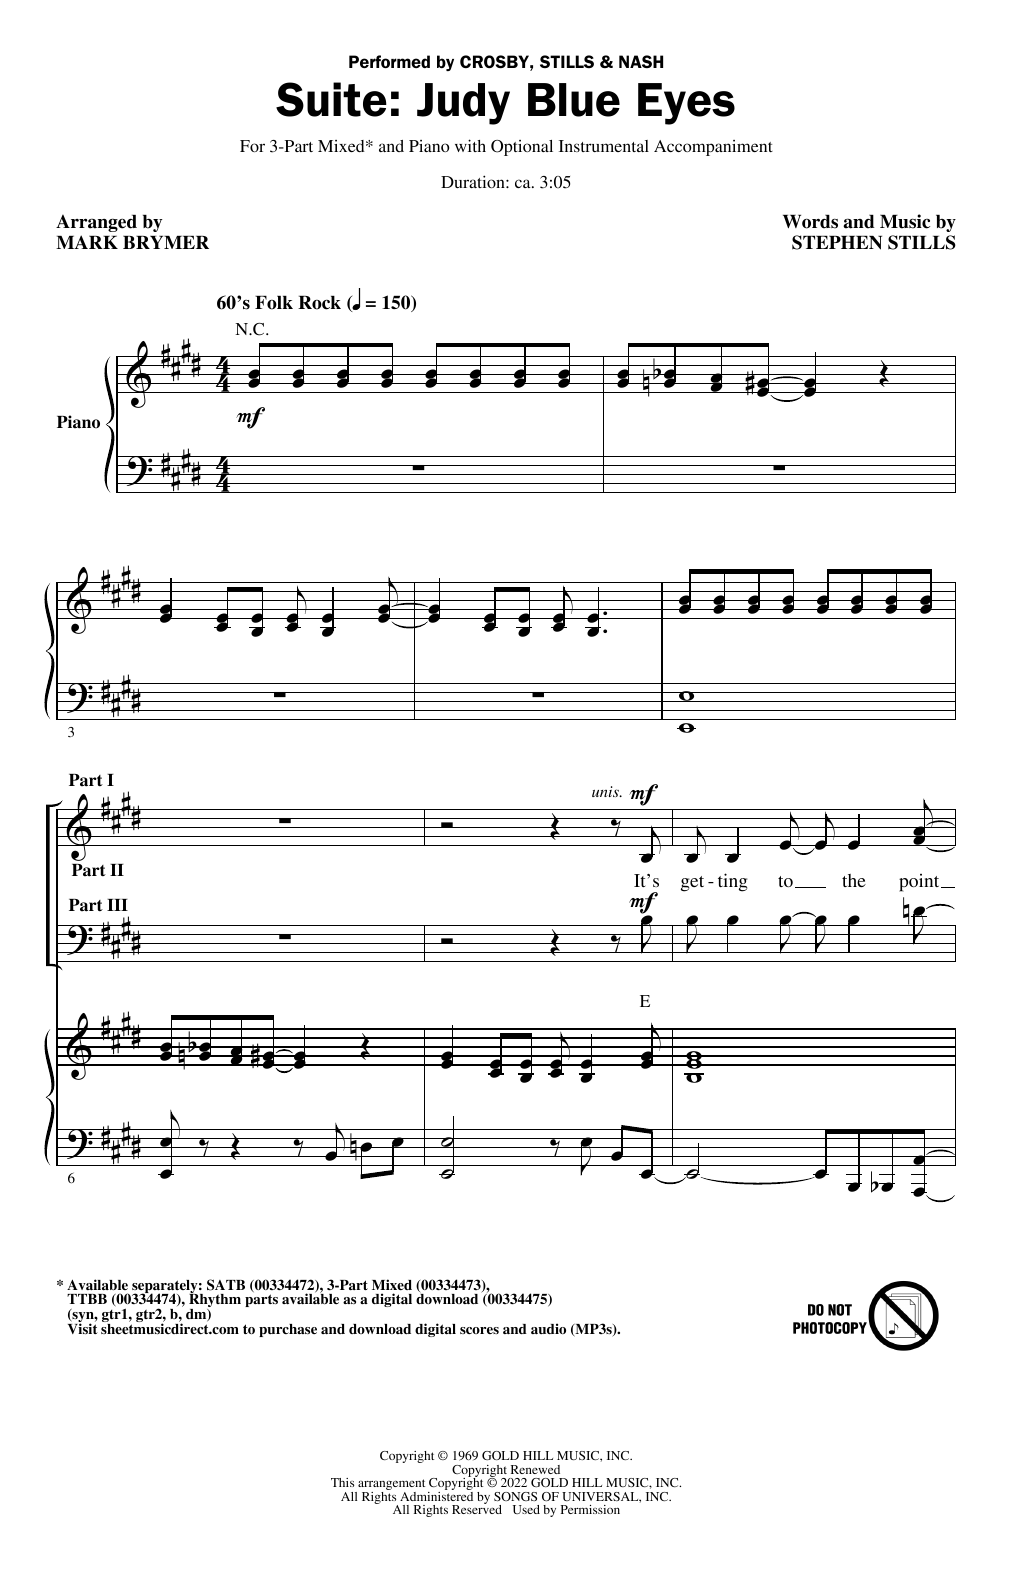 Crosby, Stills & Nash Suite: Judy Blue Eyes (arr. Mark Brymer) Sheet Music Notes & Chords for SATB Choir - Download or Print PDF